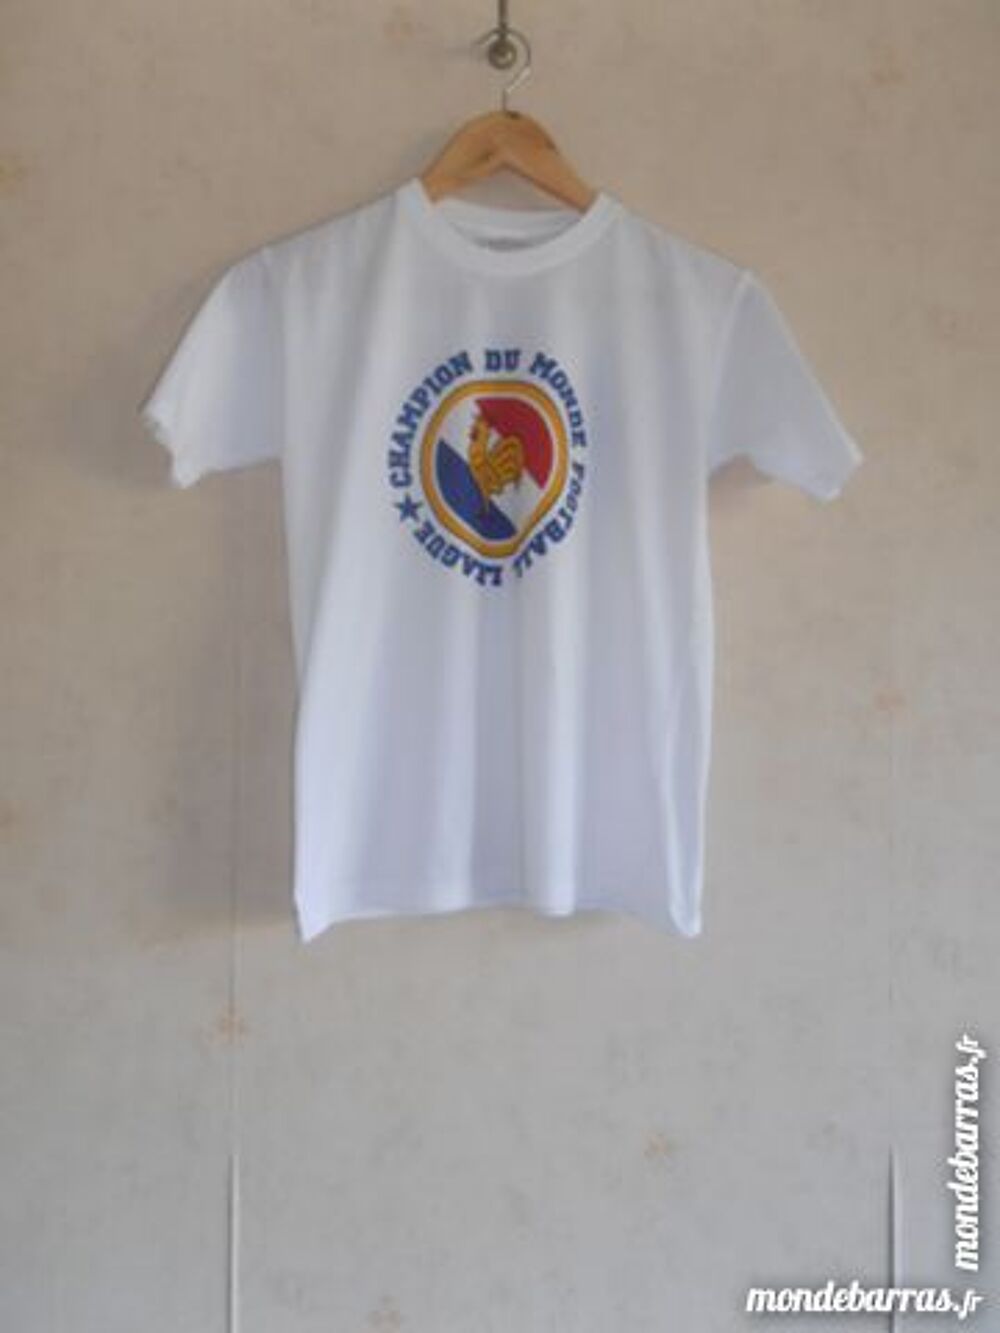 Tee-shirt Champion du Monde Football League (68) Vtements enfants